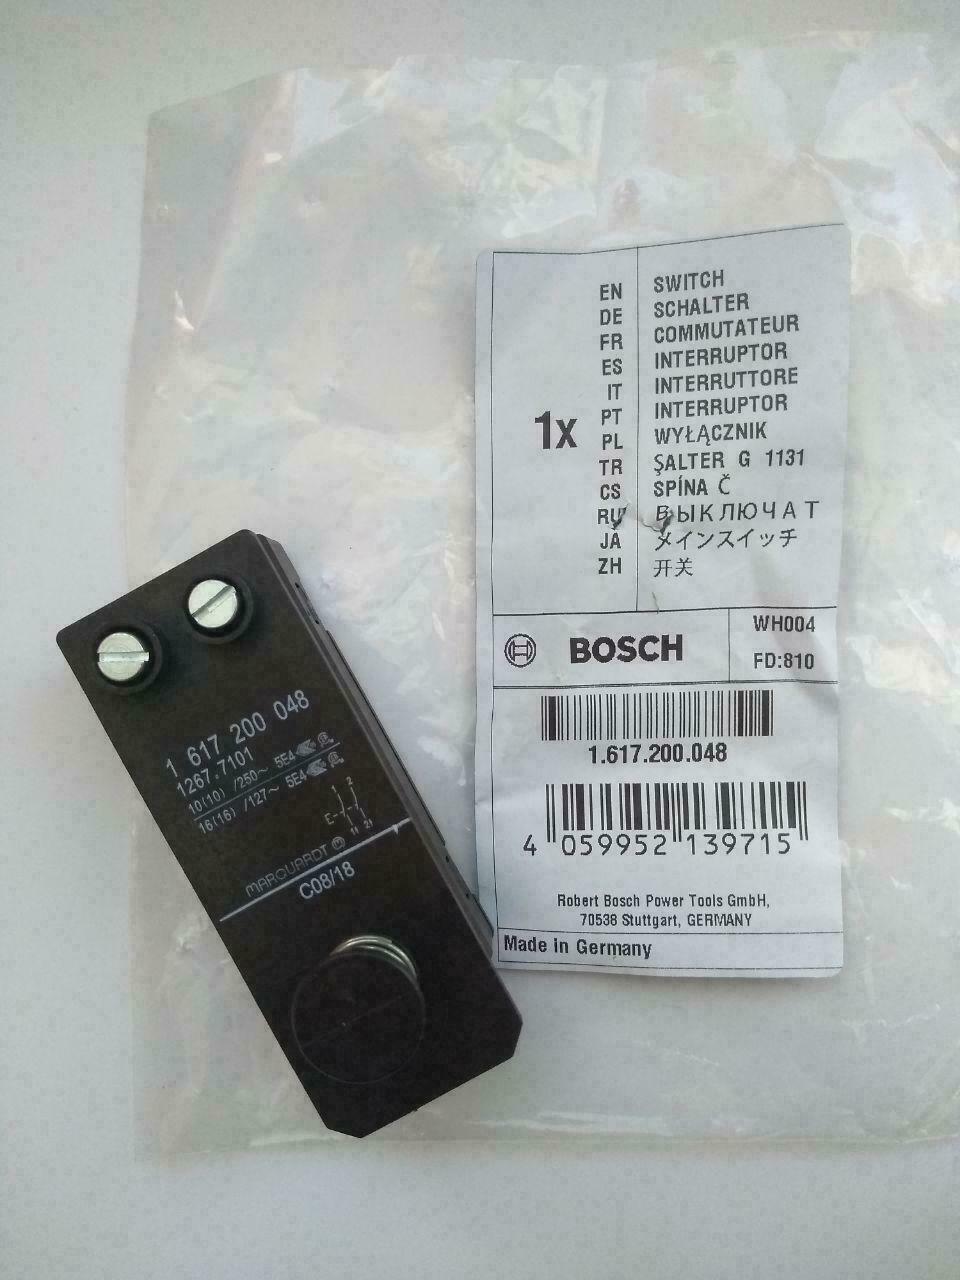 Bosch 1617200048 GSH10 Rotary Hammers 1 617 200 048 - $33.85